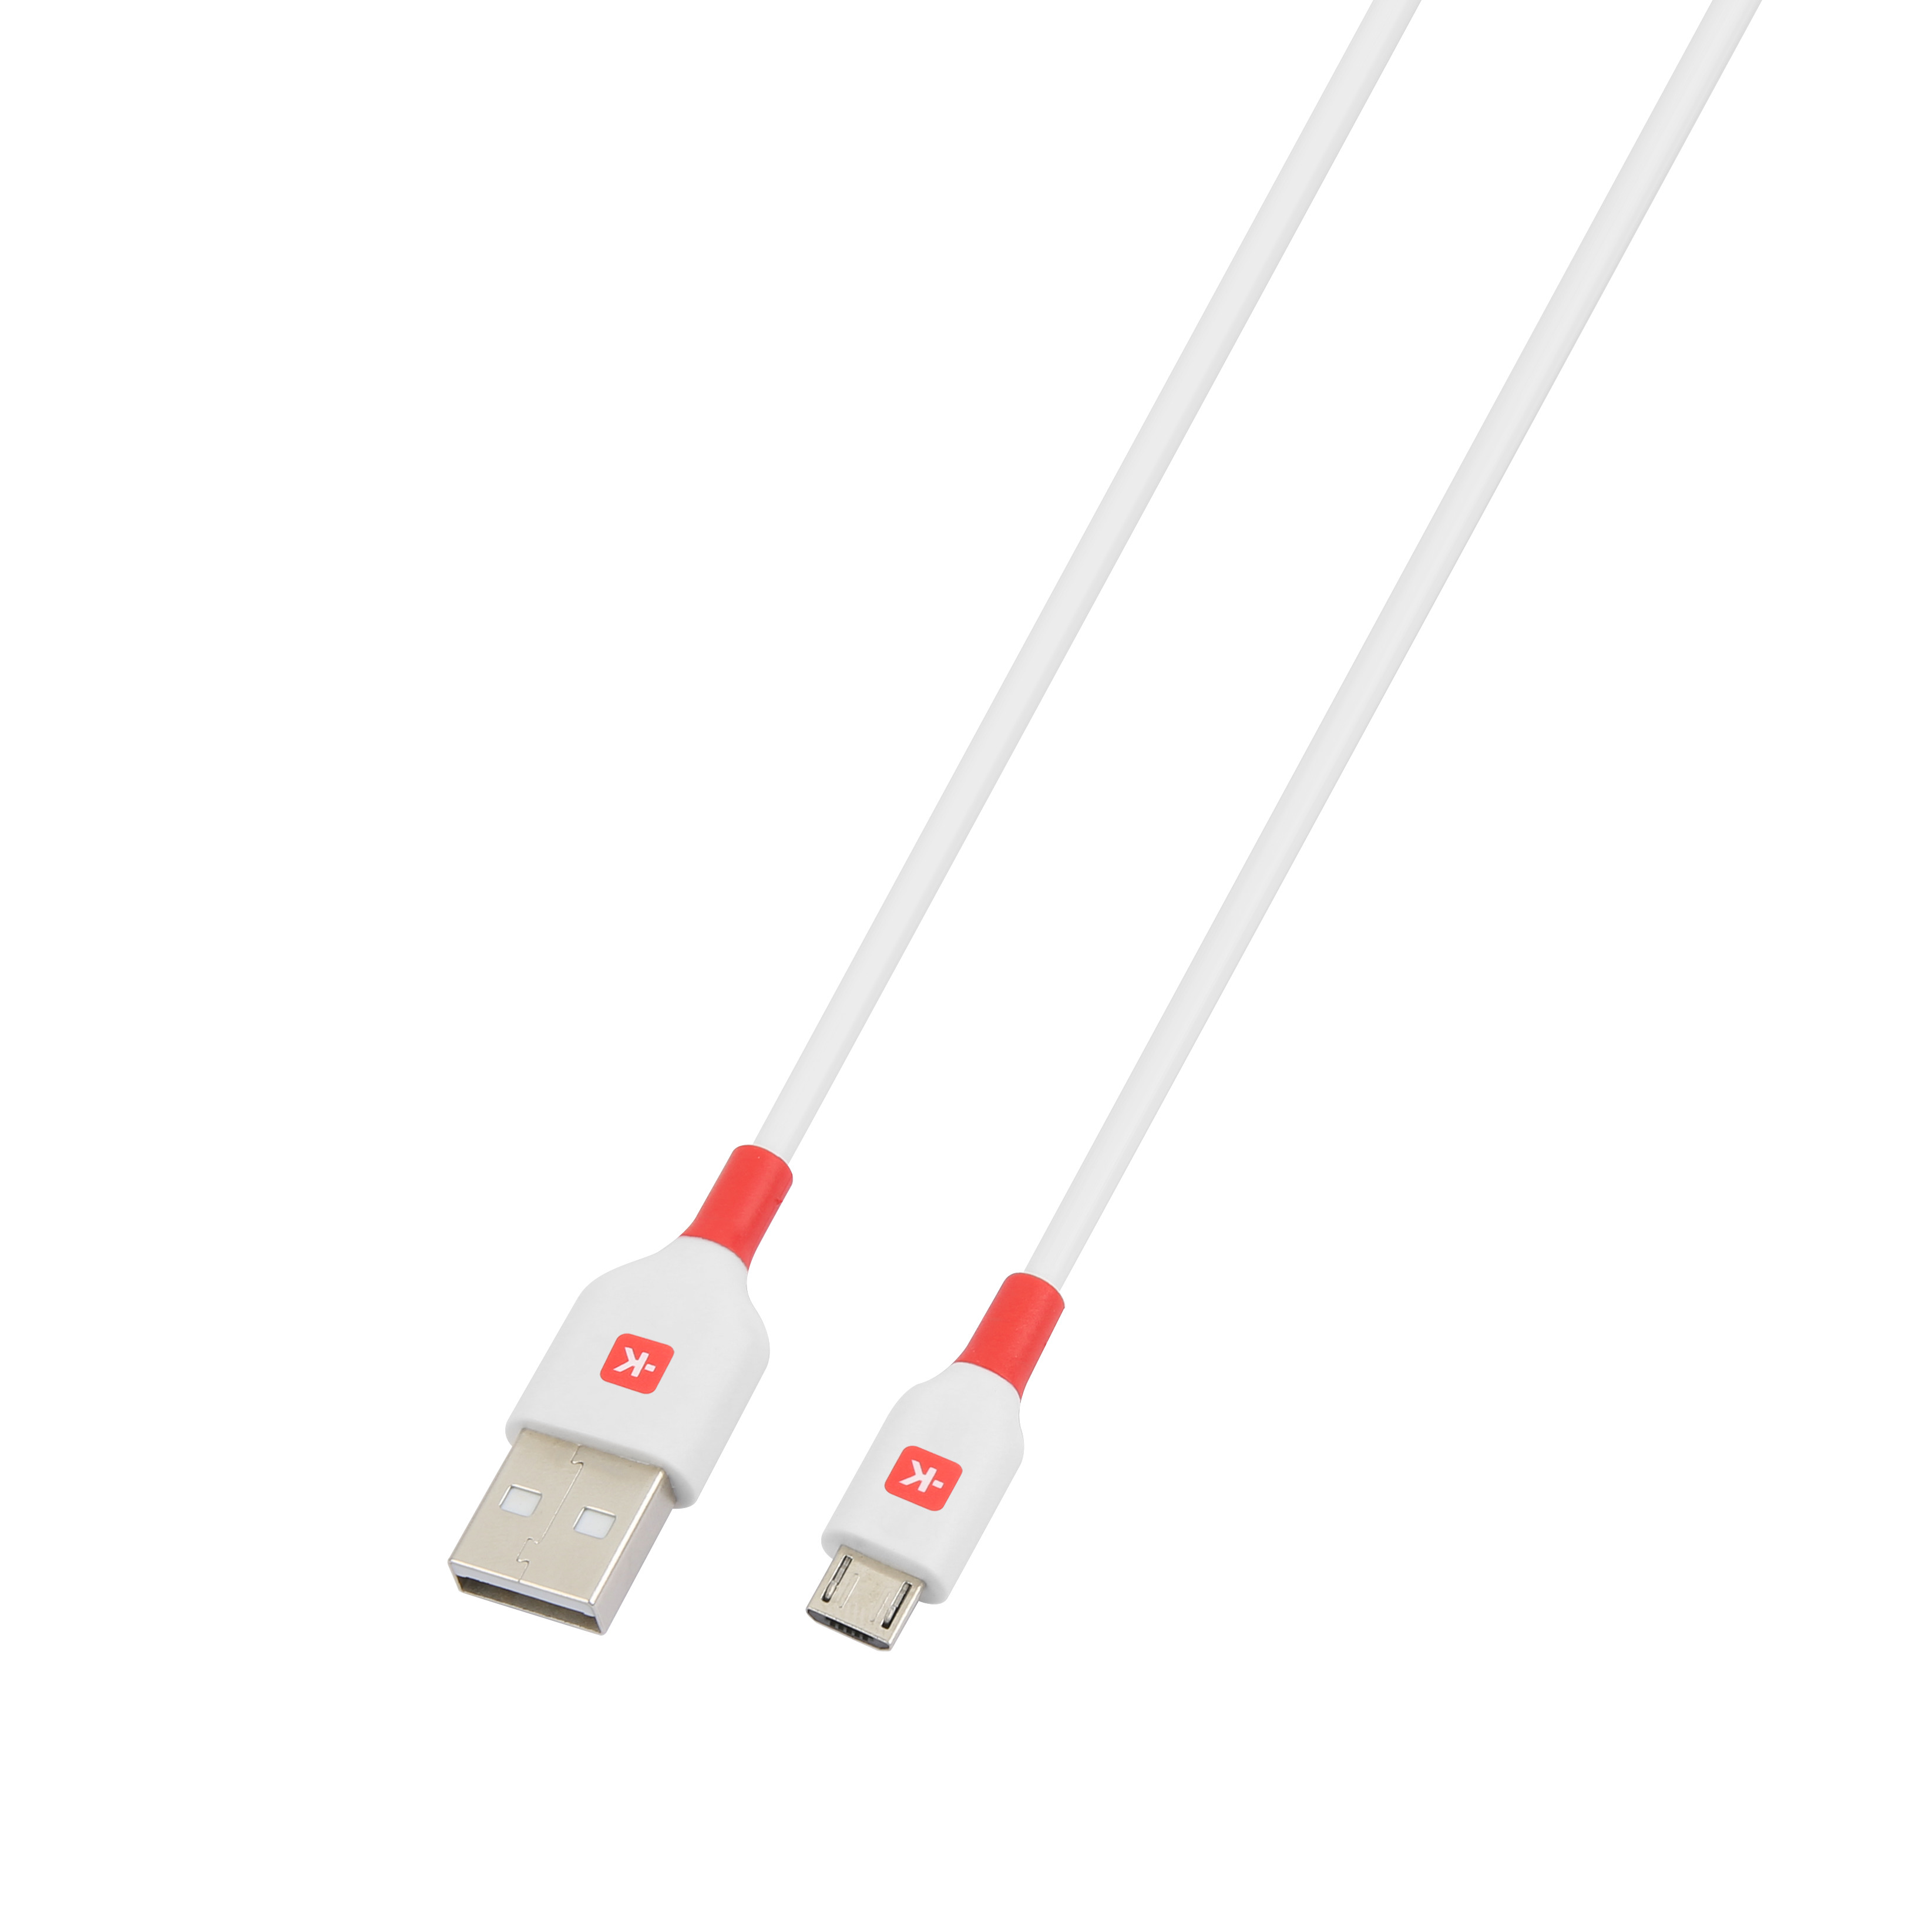 SKROSS Micro USB Cable SKCA0001A-M120CN 1.2m wht